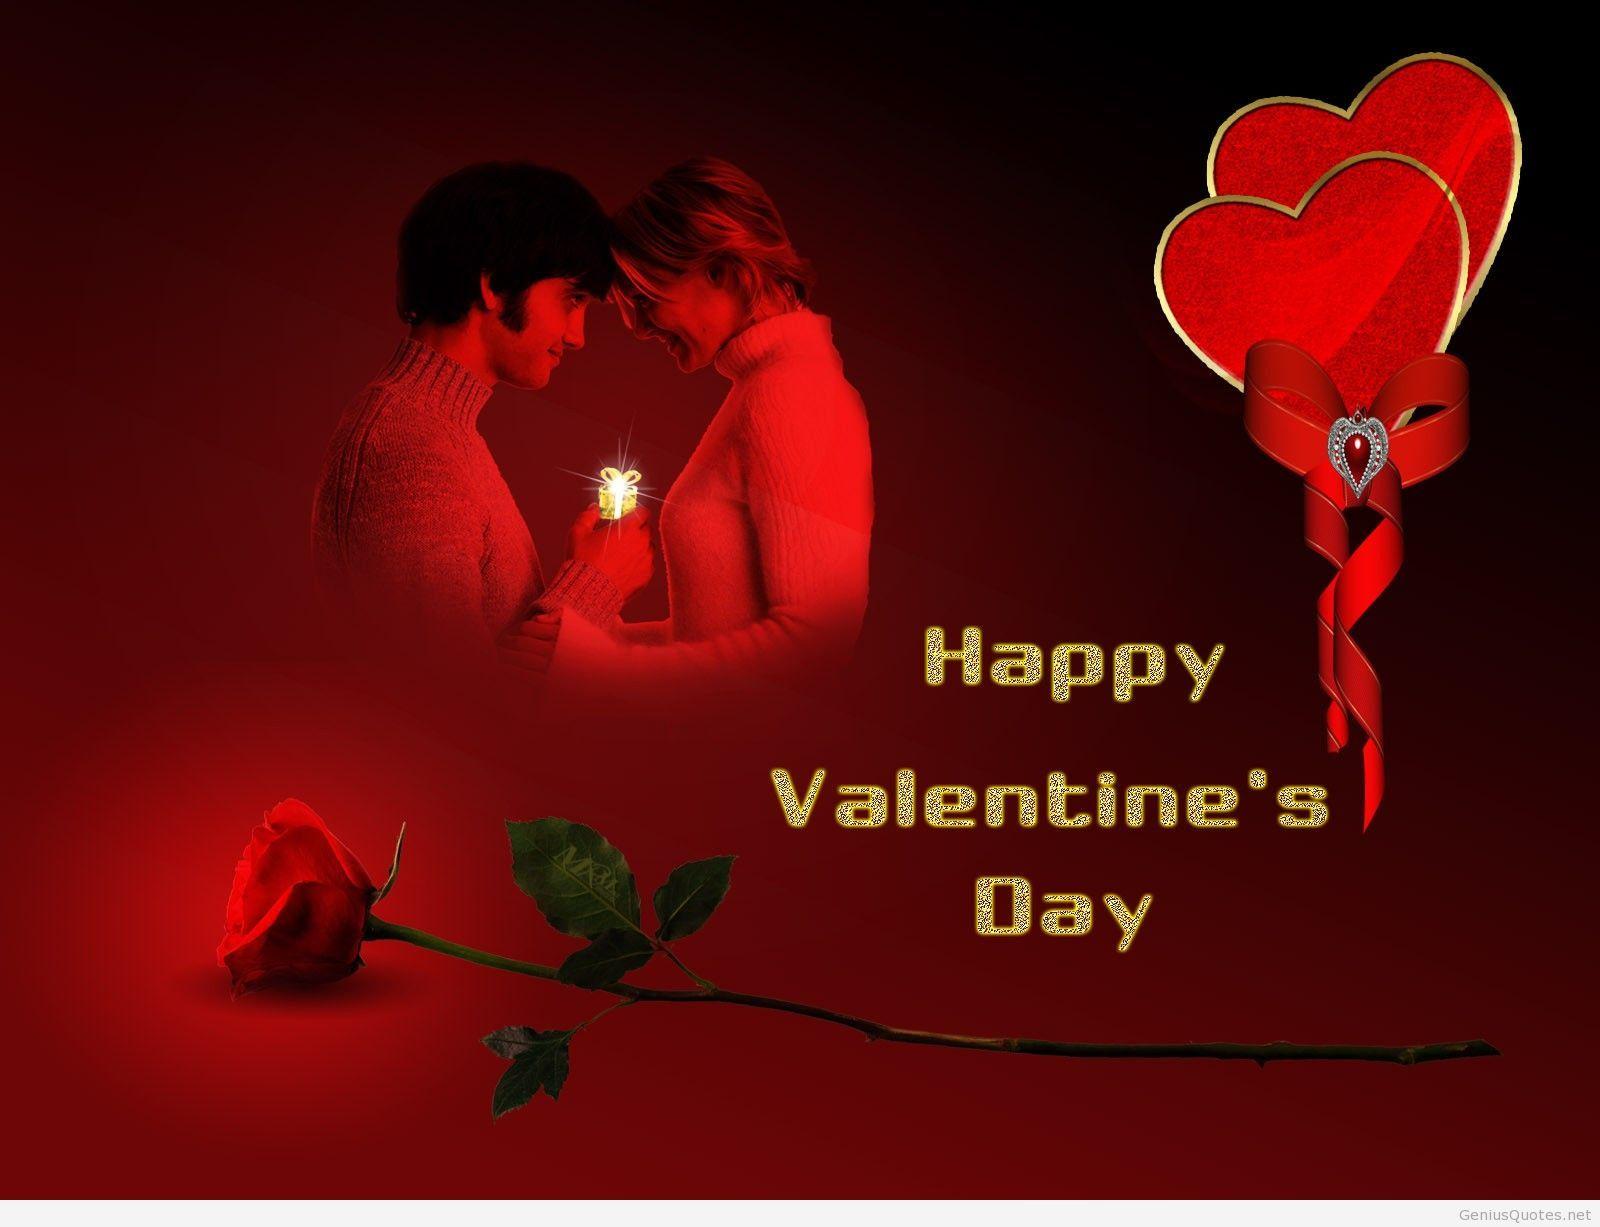 Happy Valentine Day Special Couple Image. Happy valentines